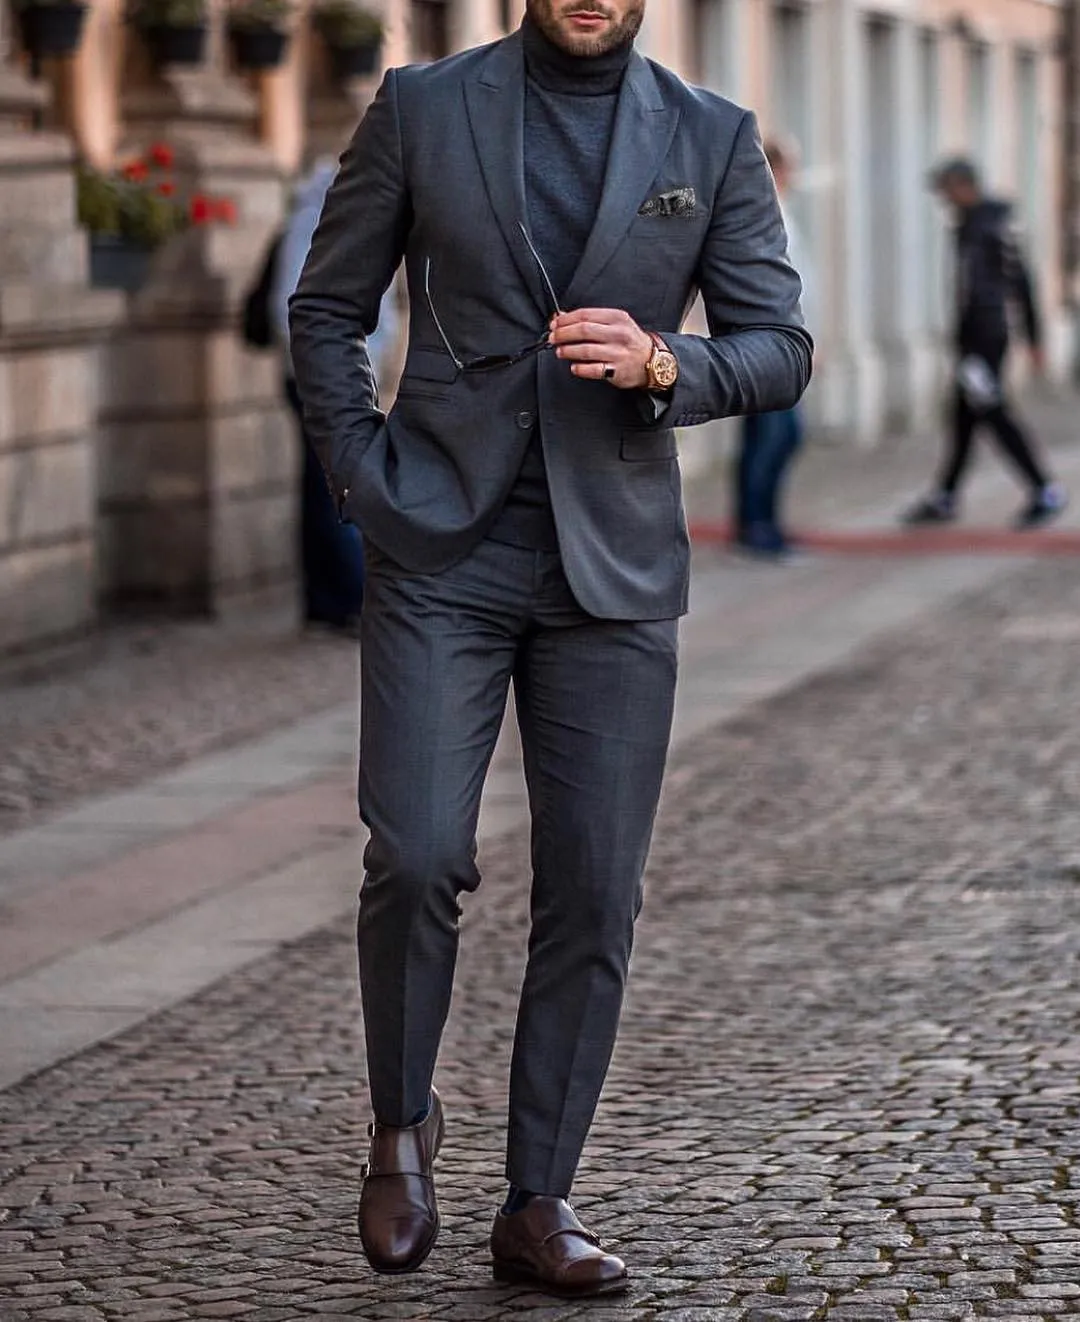 Indian New Design Men Suits 3 Piece Designer Tuxedo Black and Grey Style  Wedding Suit Elegant Suit Formal Fashion Suits Bespoke for Men - Etsy